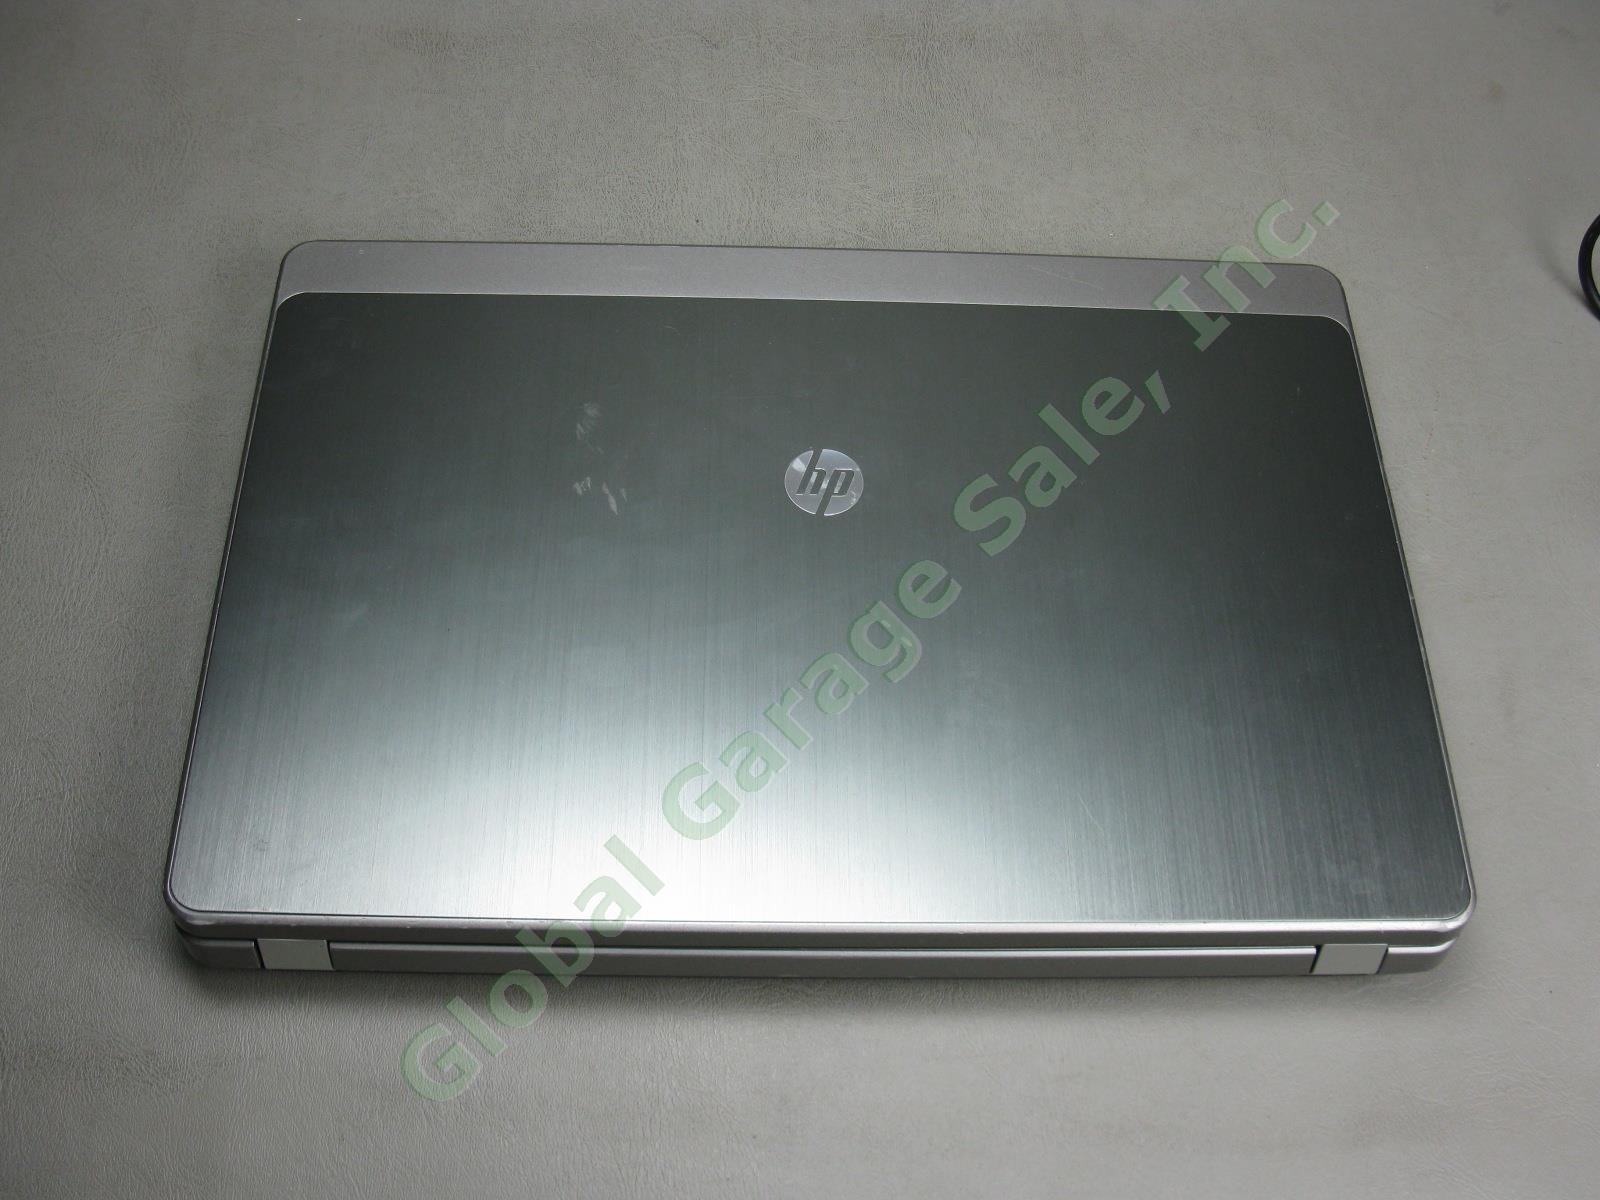 HP 4530s ProBook 15.6" Laptop Intel i3 2.3GHz 4GB 500GB Windows 7 Professional 6